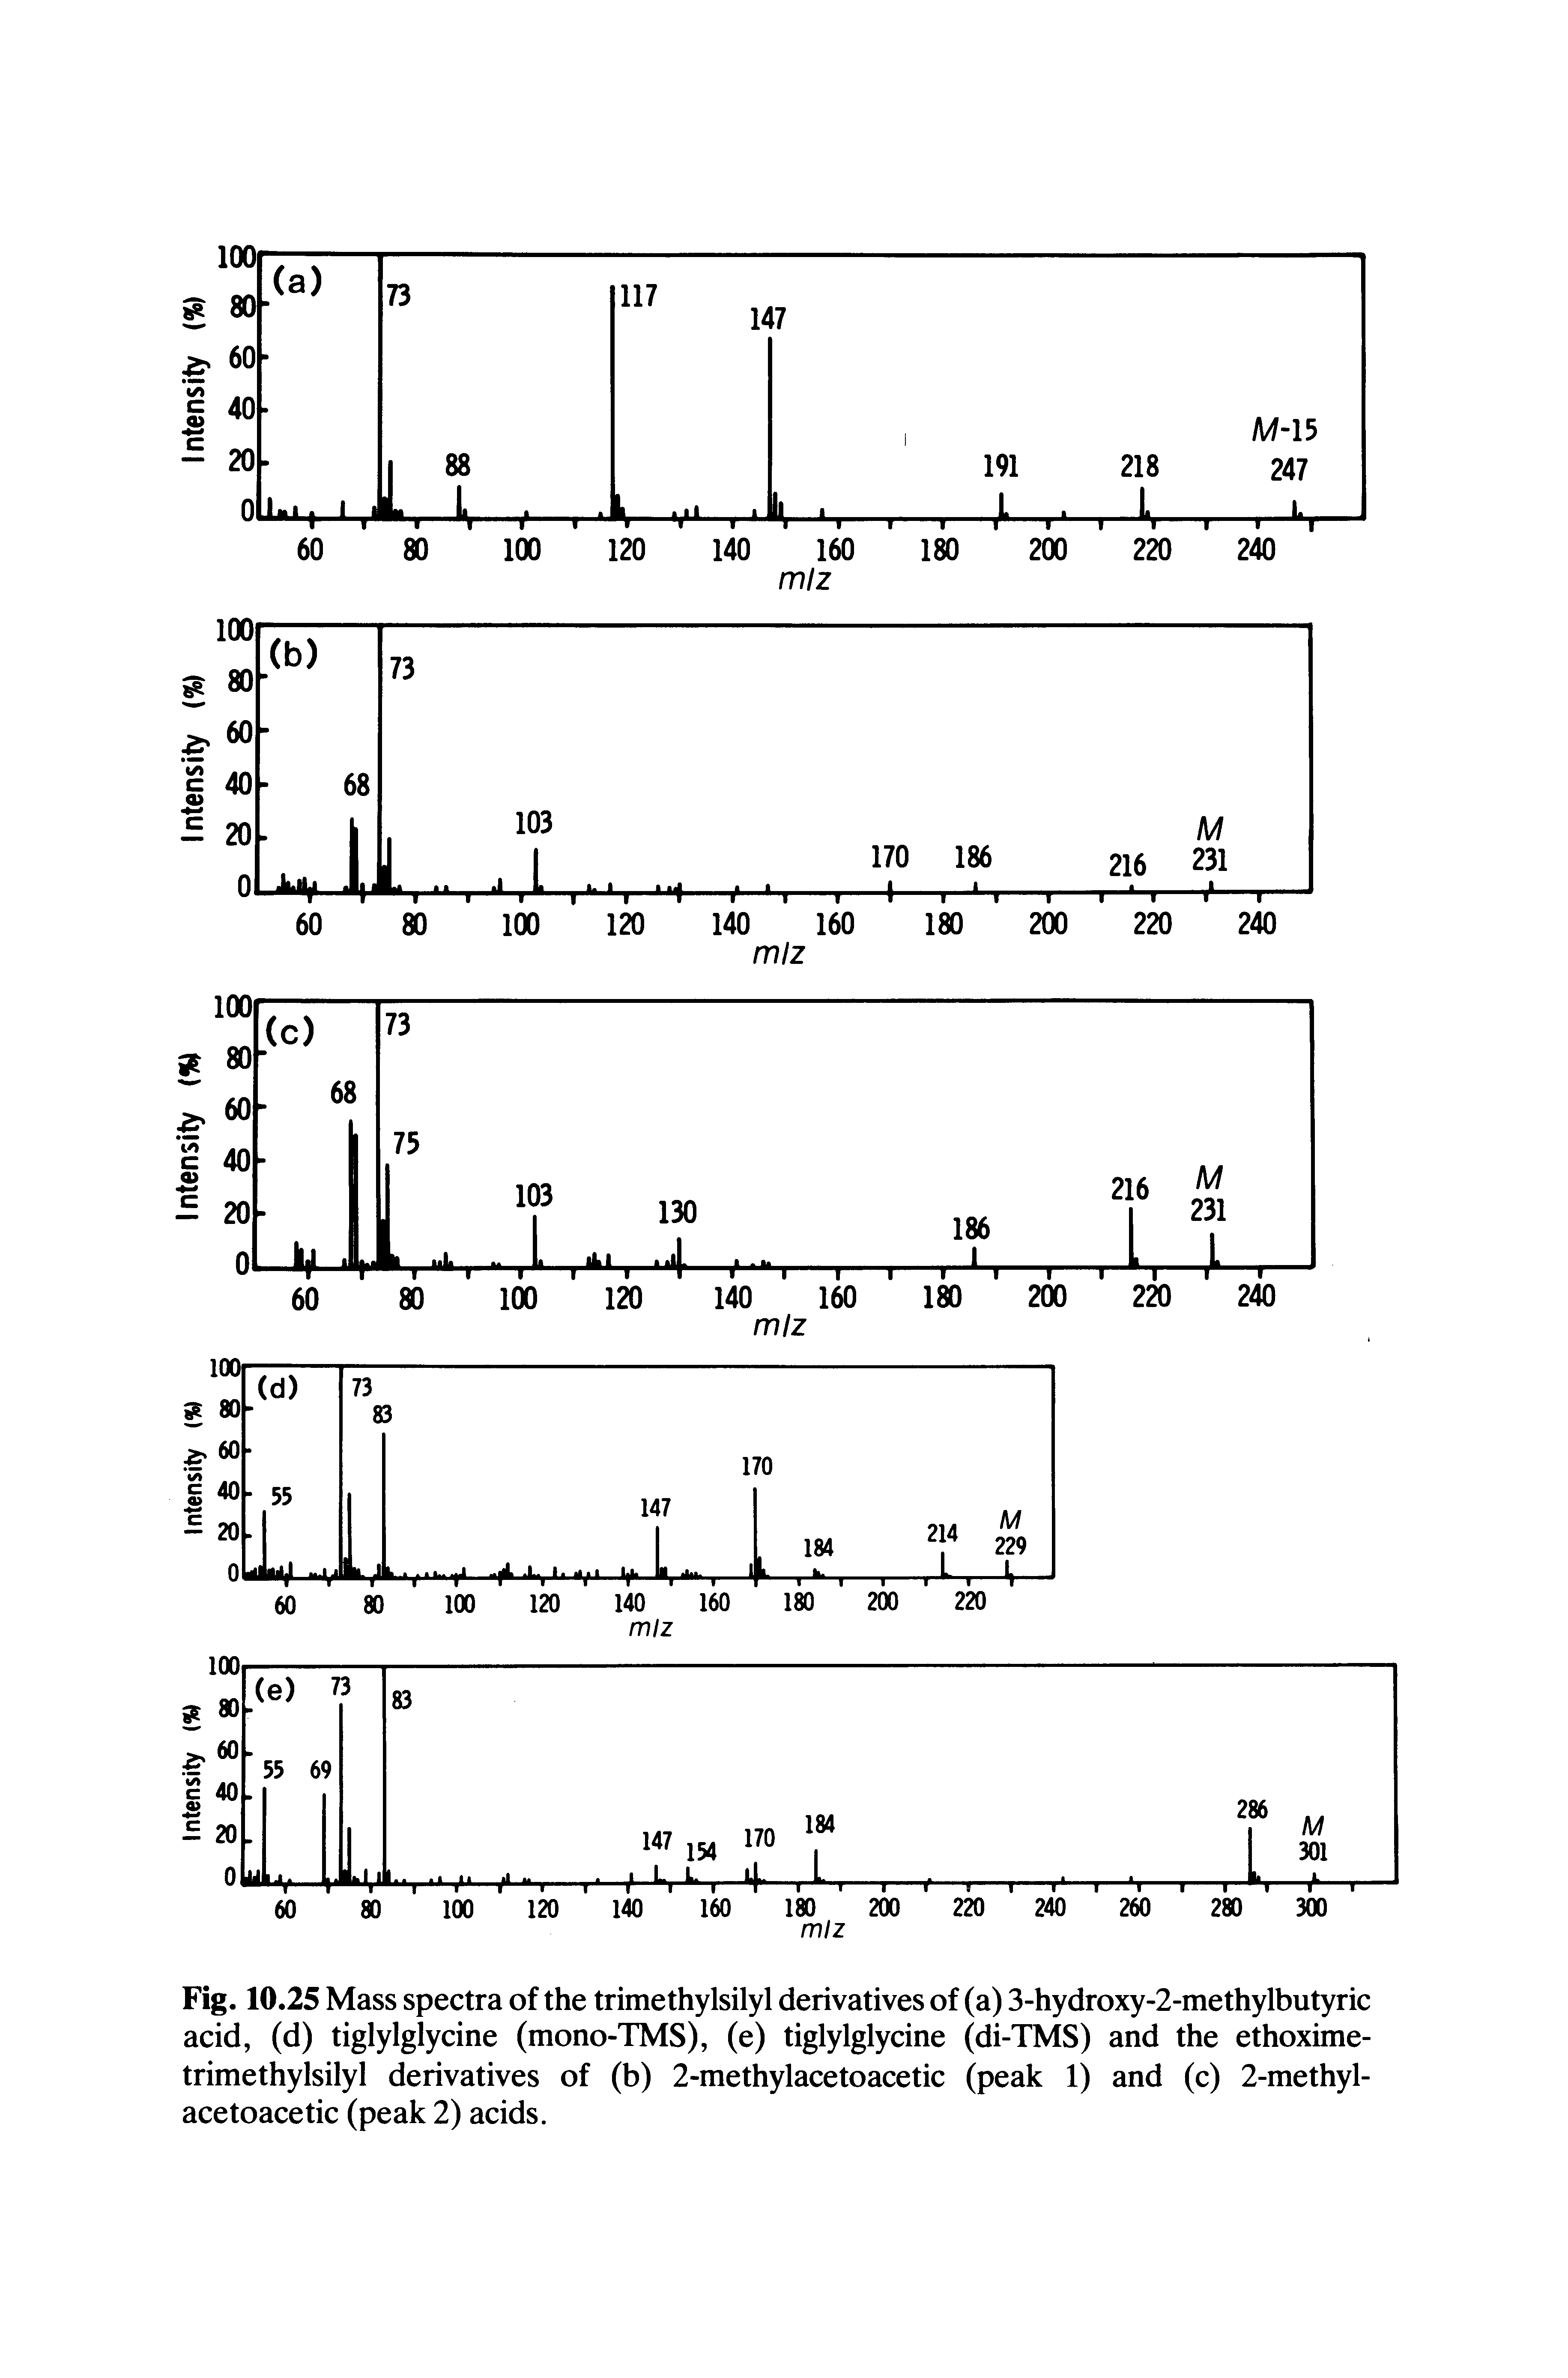 Fig. 10.25 Mass spectra of the trimethylsilyl derivatives of (a) 3-hydroxy-2-methylbutyric acid, (d) tiglylglycine (mono-TMS), (e) tiglylglycine (di-TMS) and the ethoxime-trimethylsilyl derivatives of (b) 2-methylacetoacetic (peak 1) and (c) 2-methyl-acetoacetic (peak 2) acids.